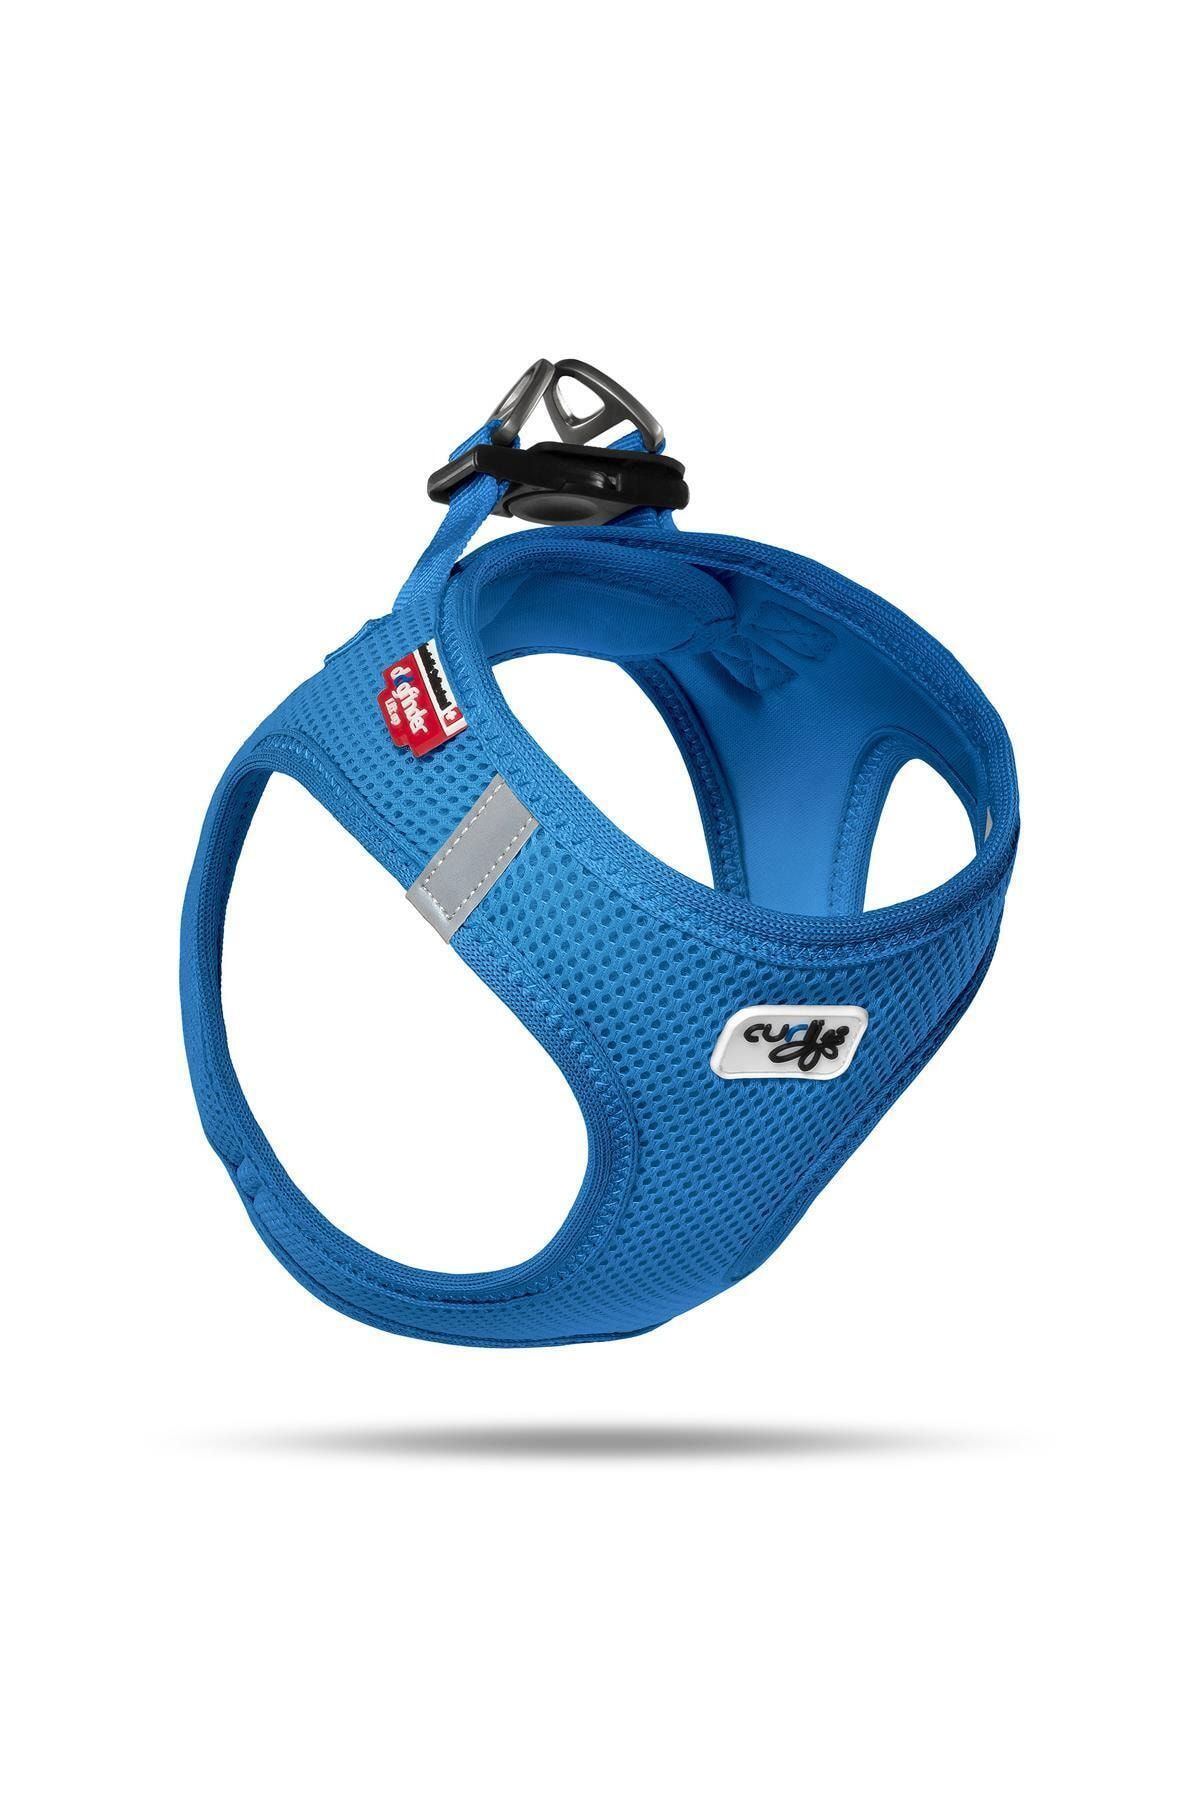 Curli Vest Air-mesh Köpek Göğüs Tasması Mavi Xxsmall 30-35 Cm